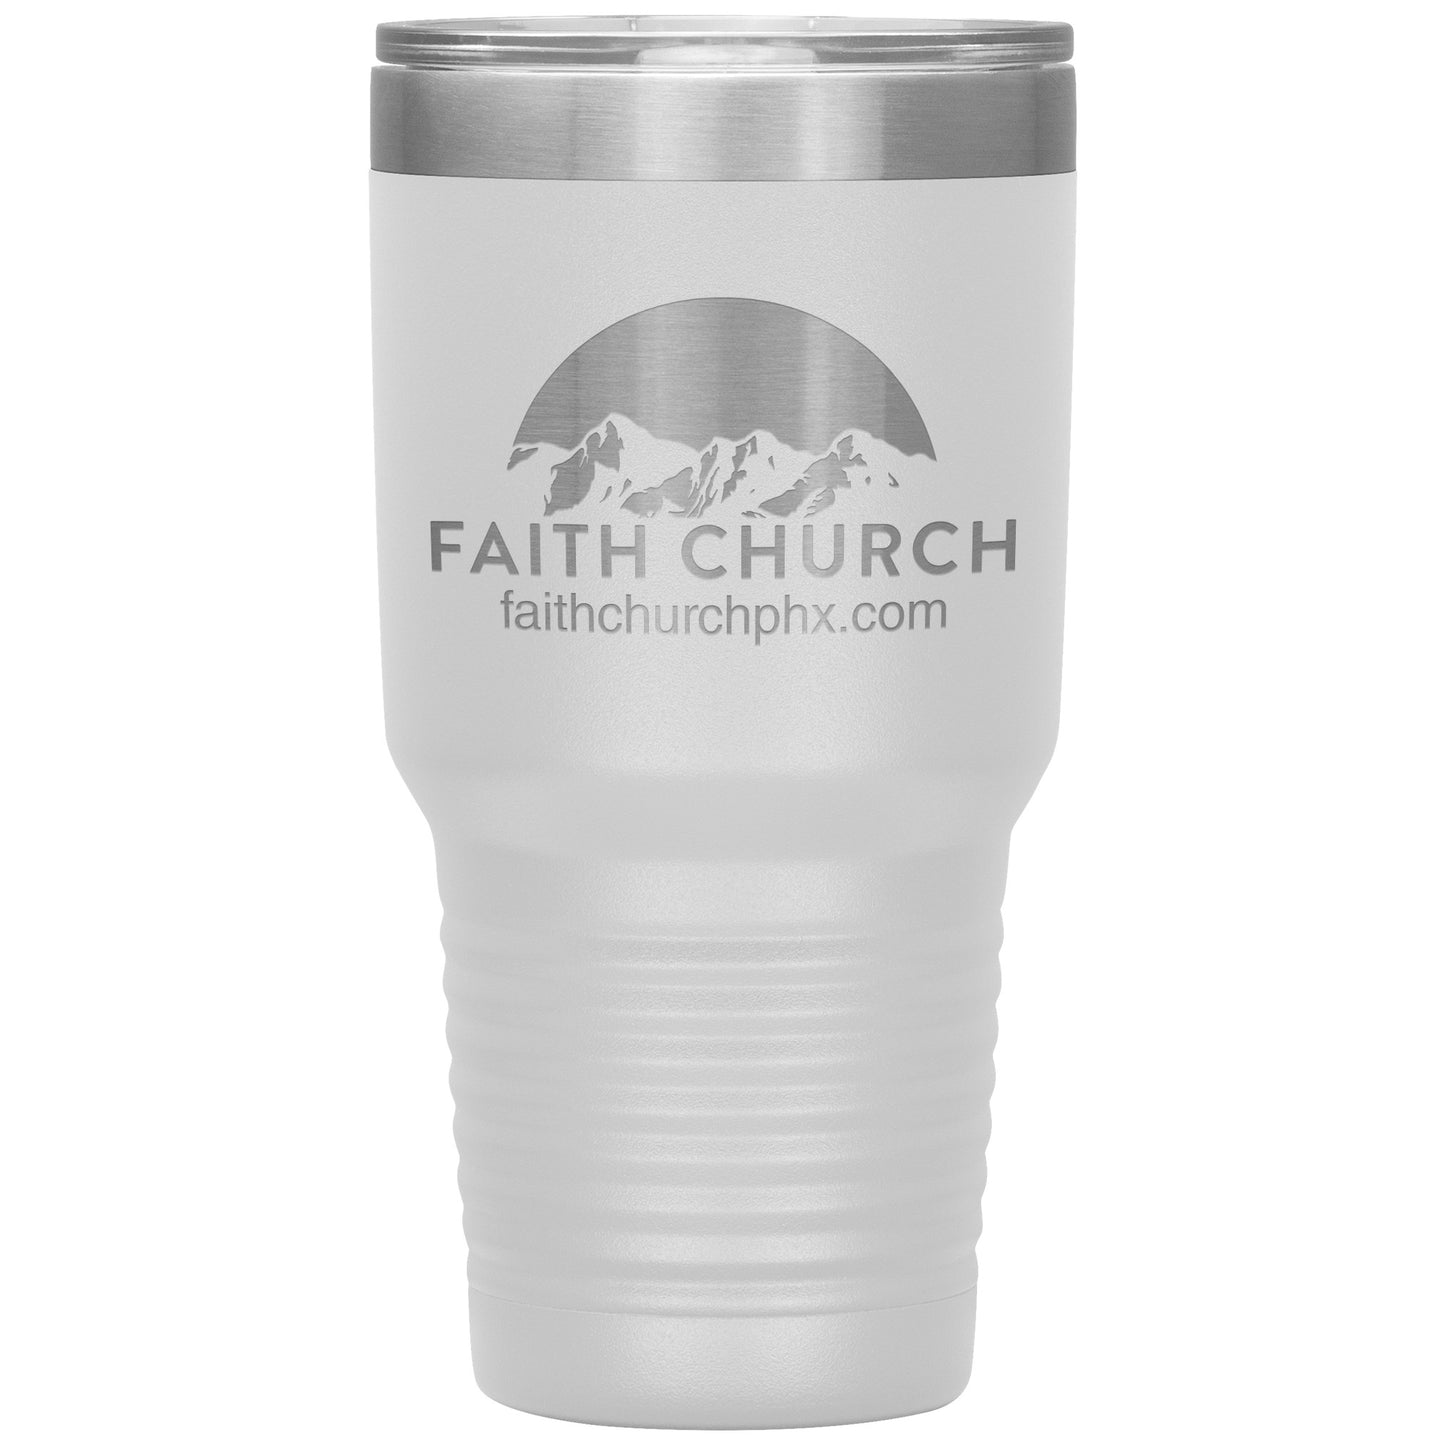 Faith Church - Insulated Tumblers